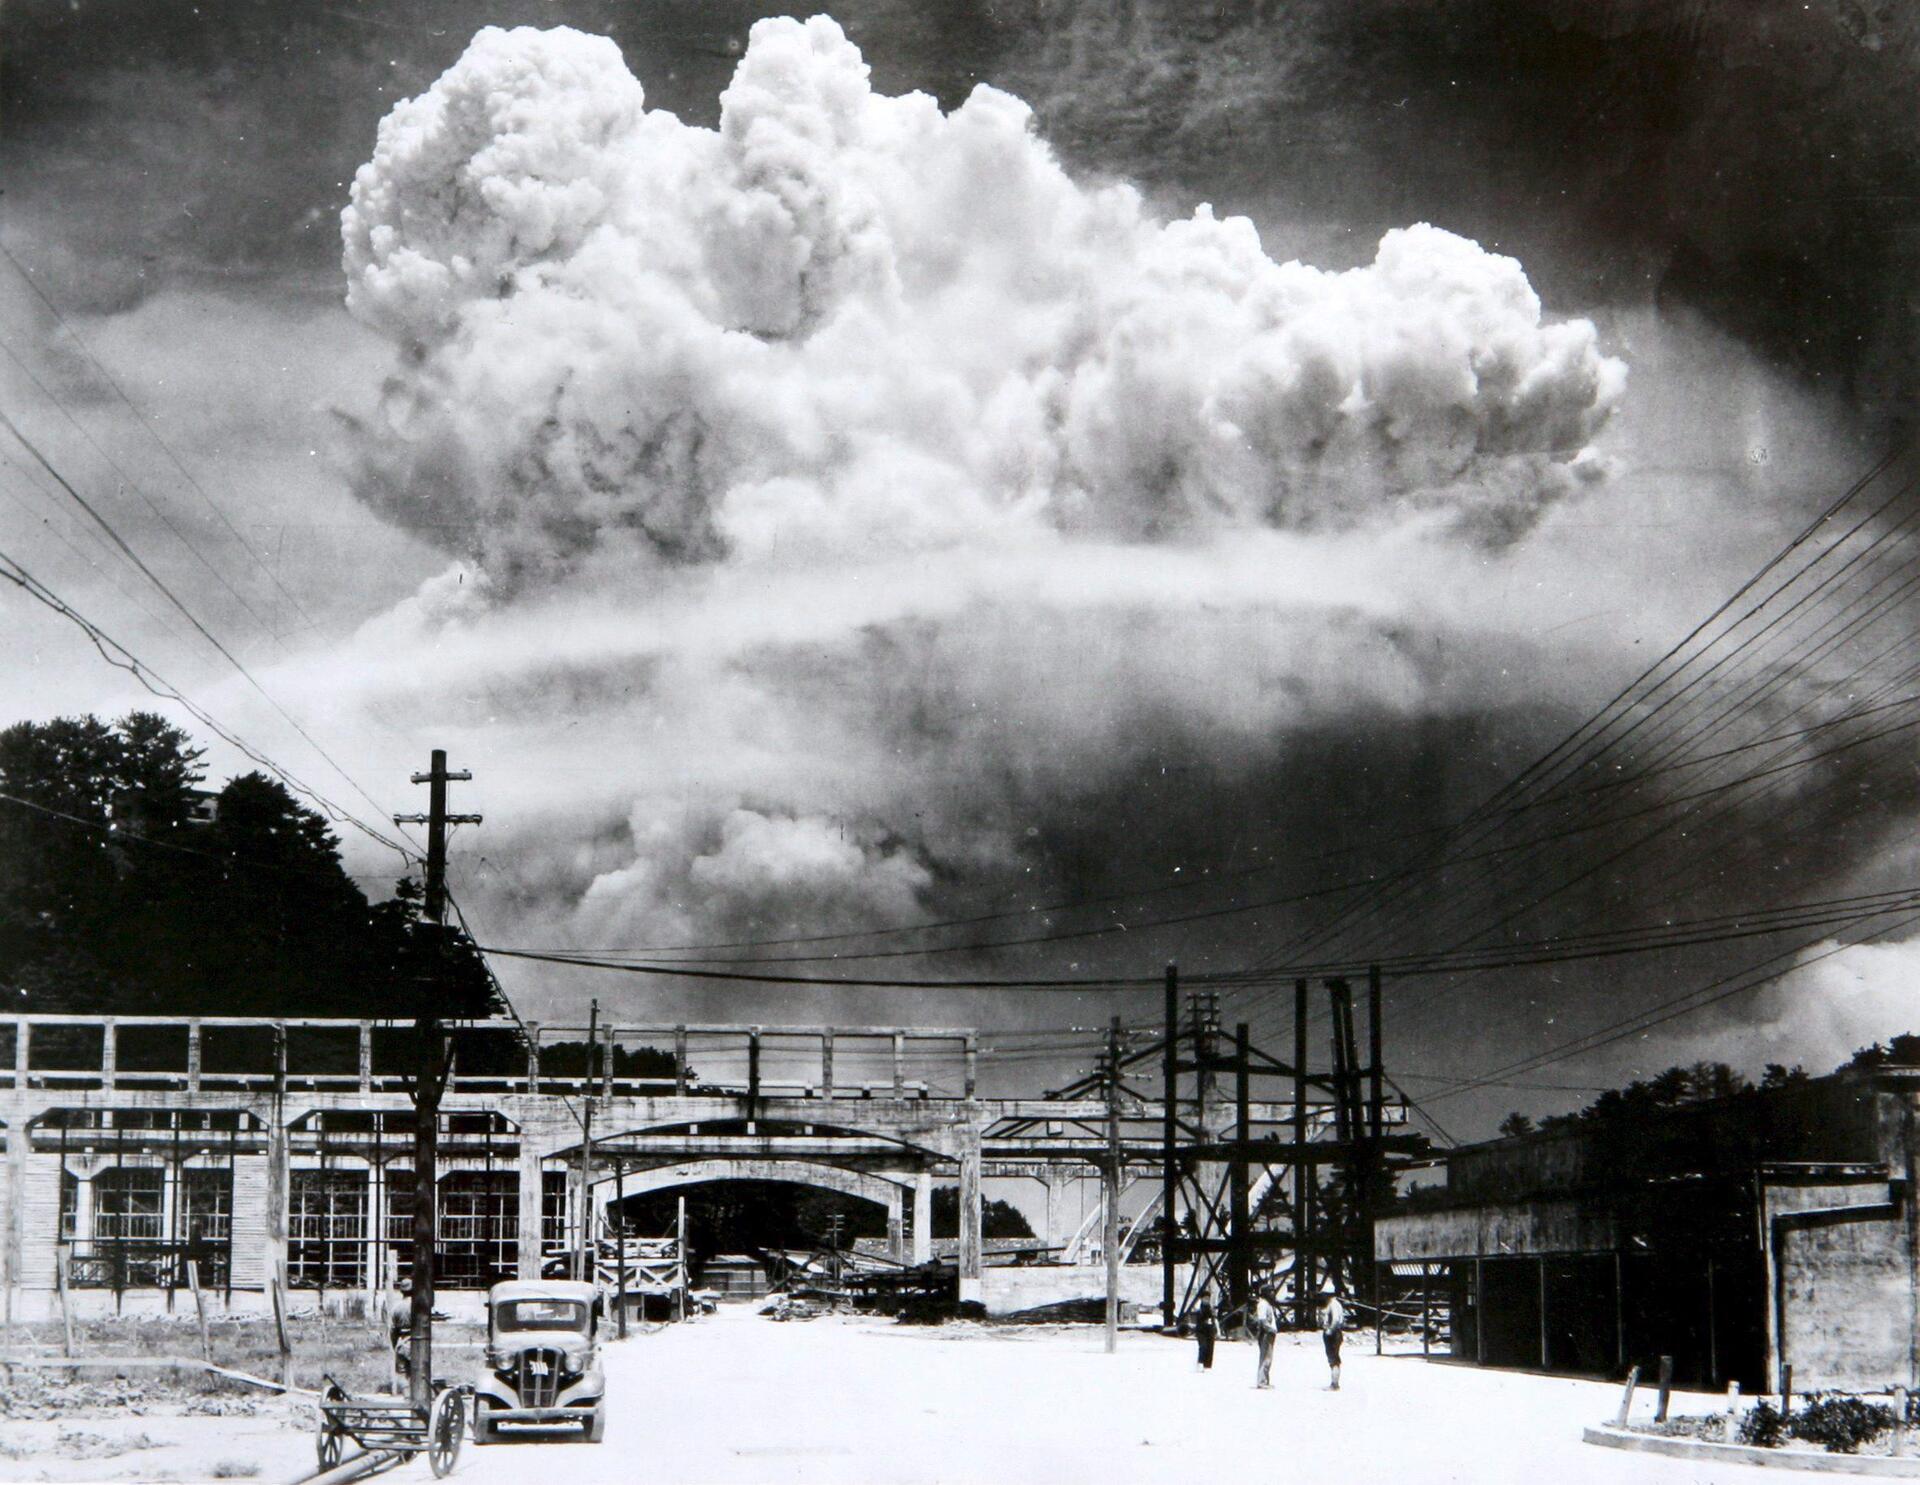 artme Σαν Σήμερα Η Δεύτερη Ατομική Βόμβα Των Αμερικανών Πέφτει Στο Ναγκασάκι.